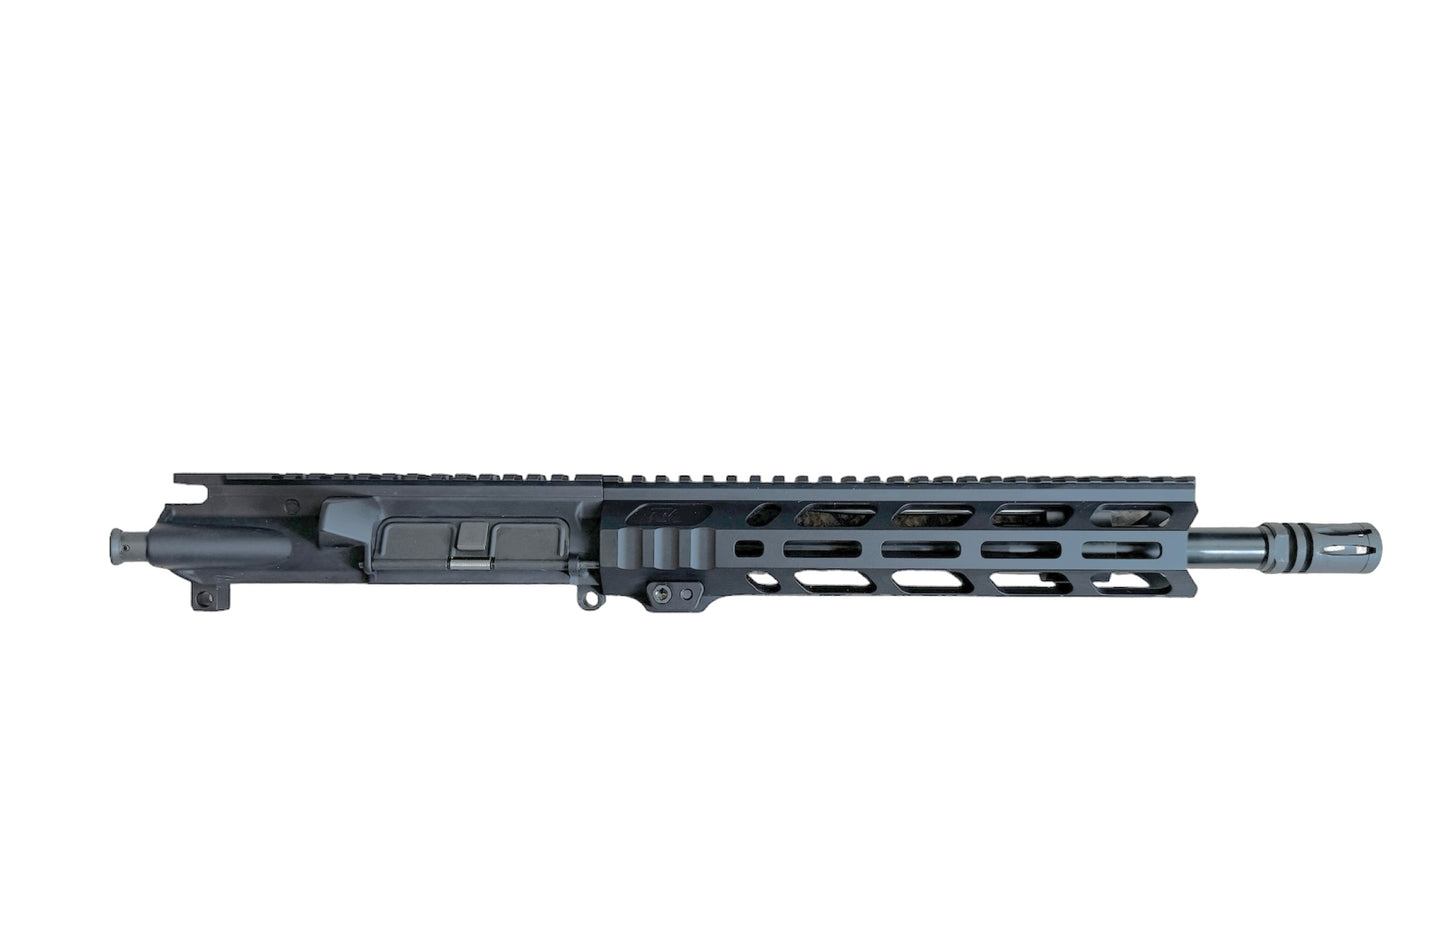 BCM Blem Upper Receiver 5.56 NATO 11.5" 1:7 Twist Carbine length with Breek Arms 9.7" RG2-S Rail